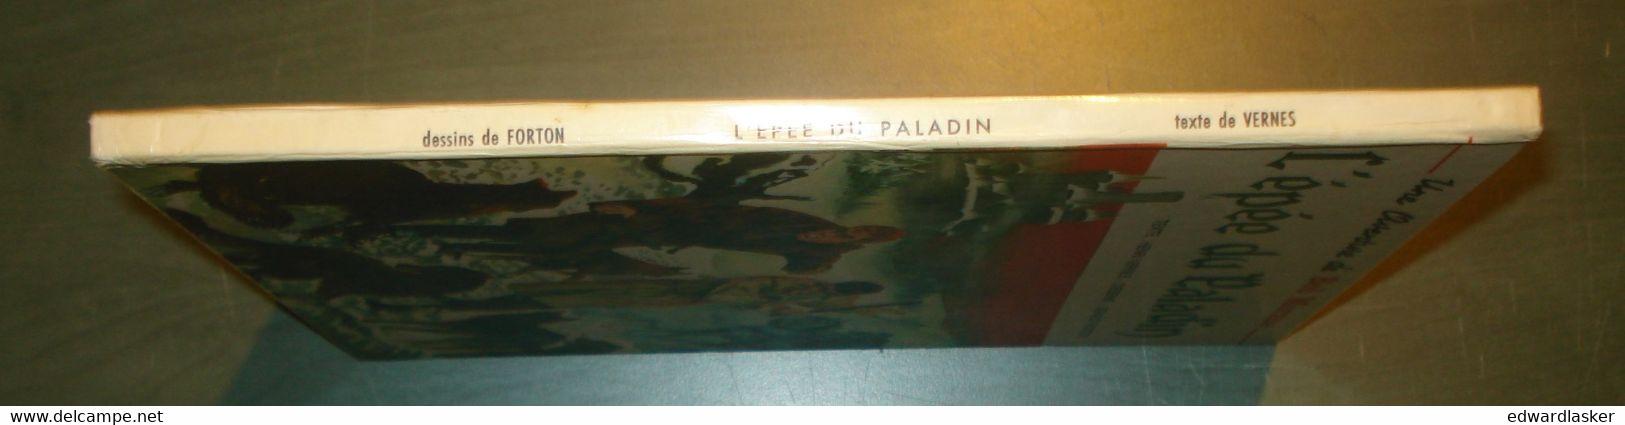 BOB MORANE : L'épée du Paladin - Forton Vernes -EO cartonnée Dargaud 1967